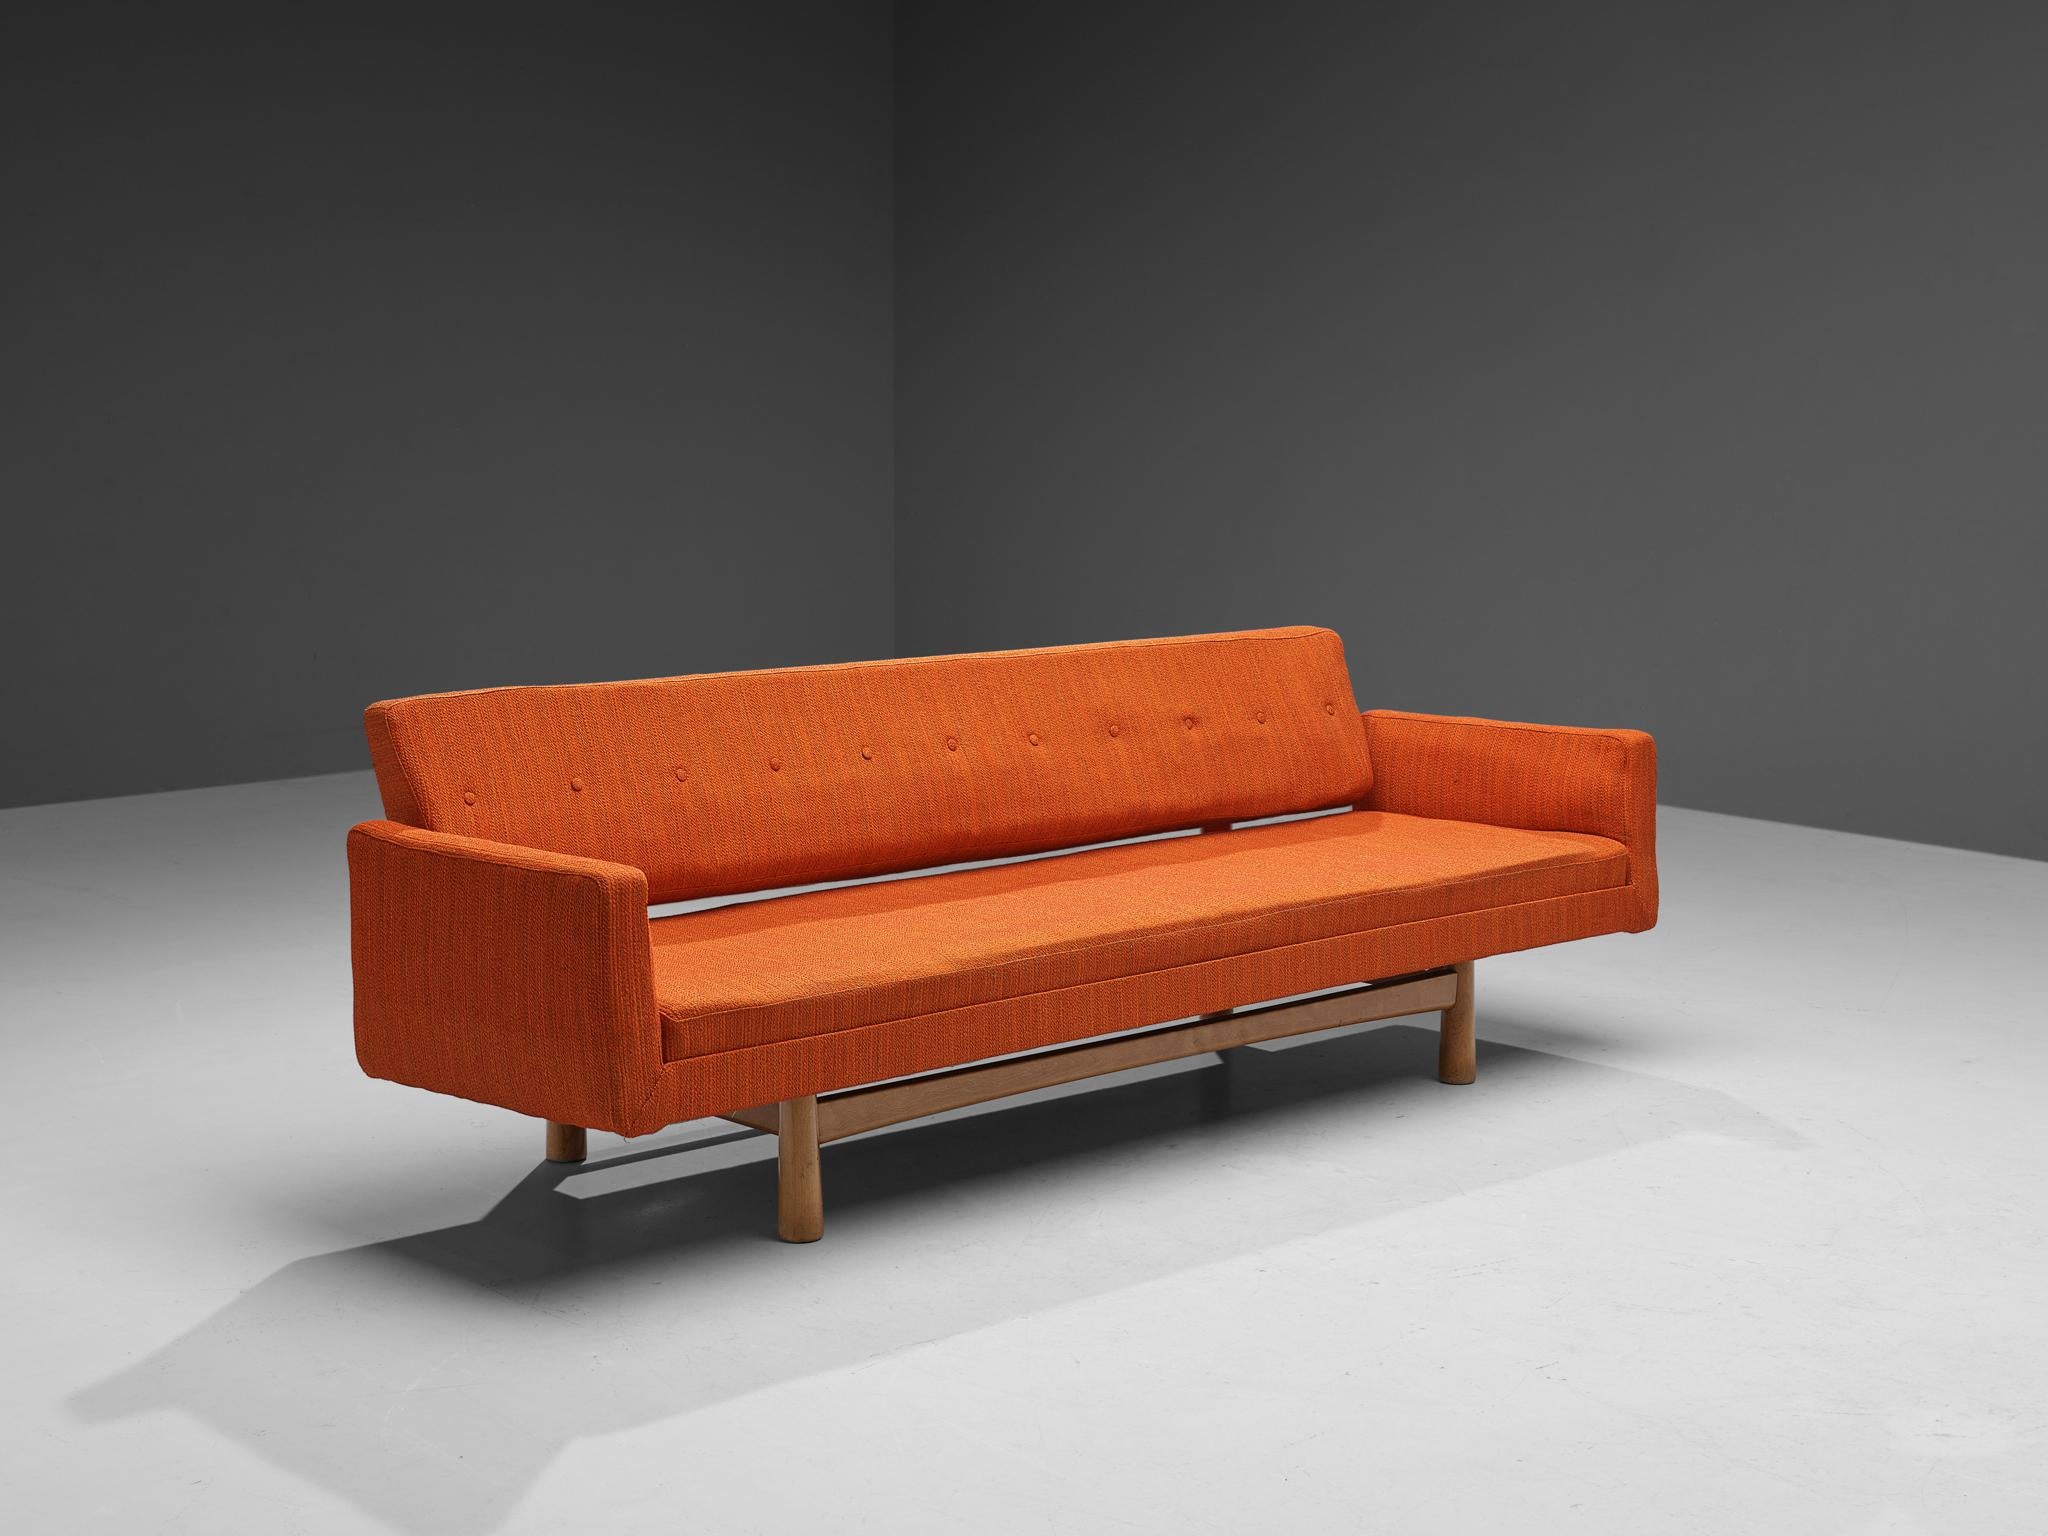 Edward Wormley 'New York' Sofa in Orange Upholstery